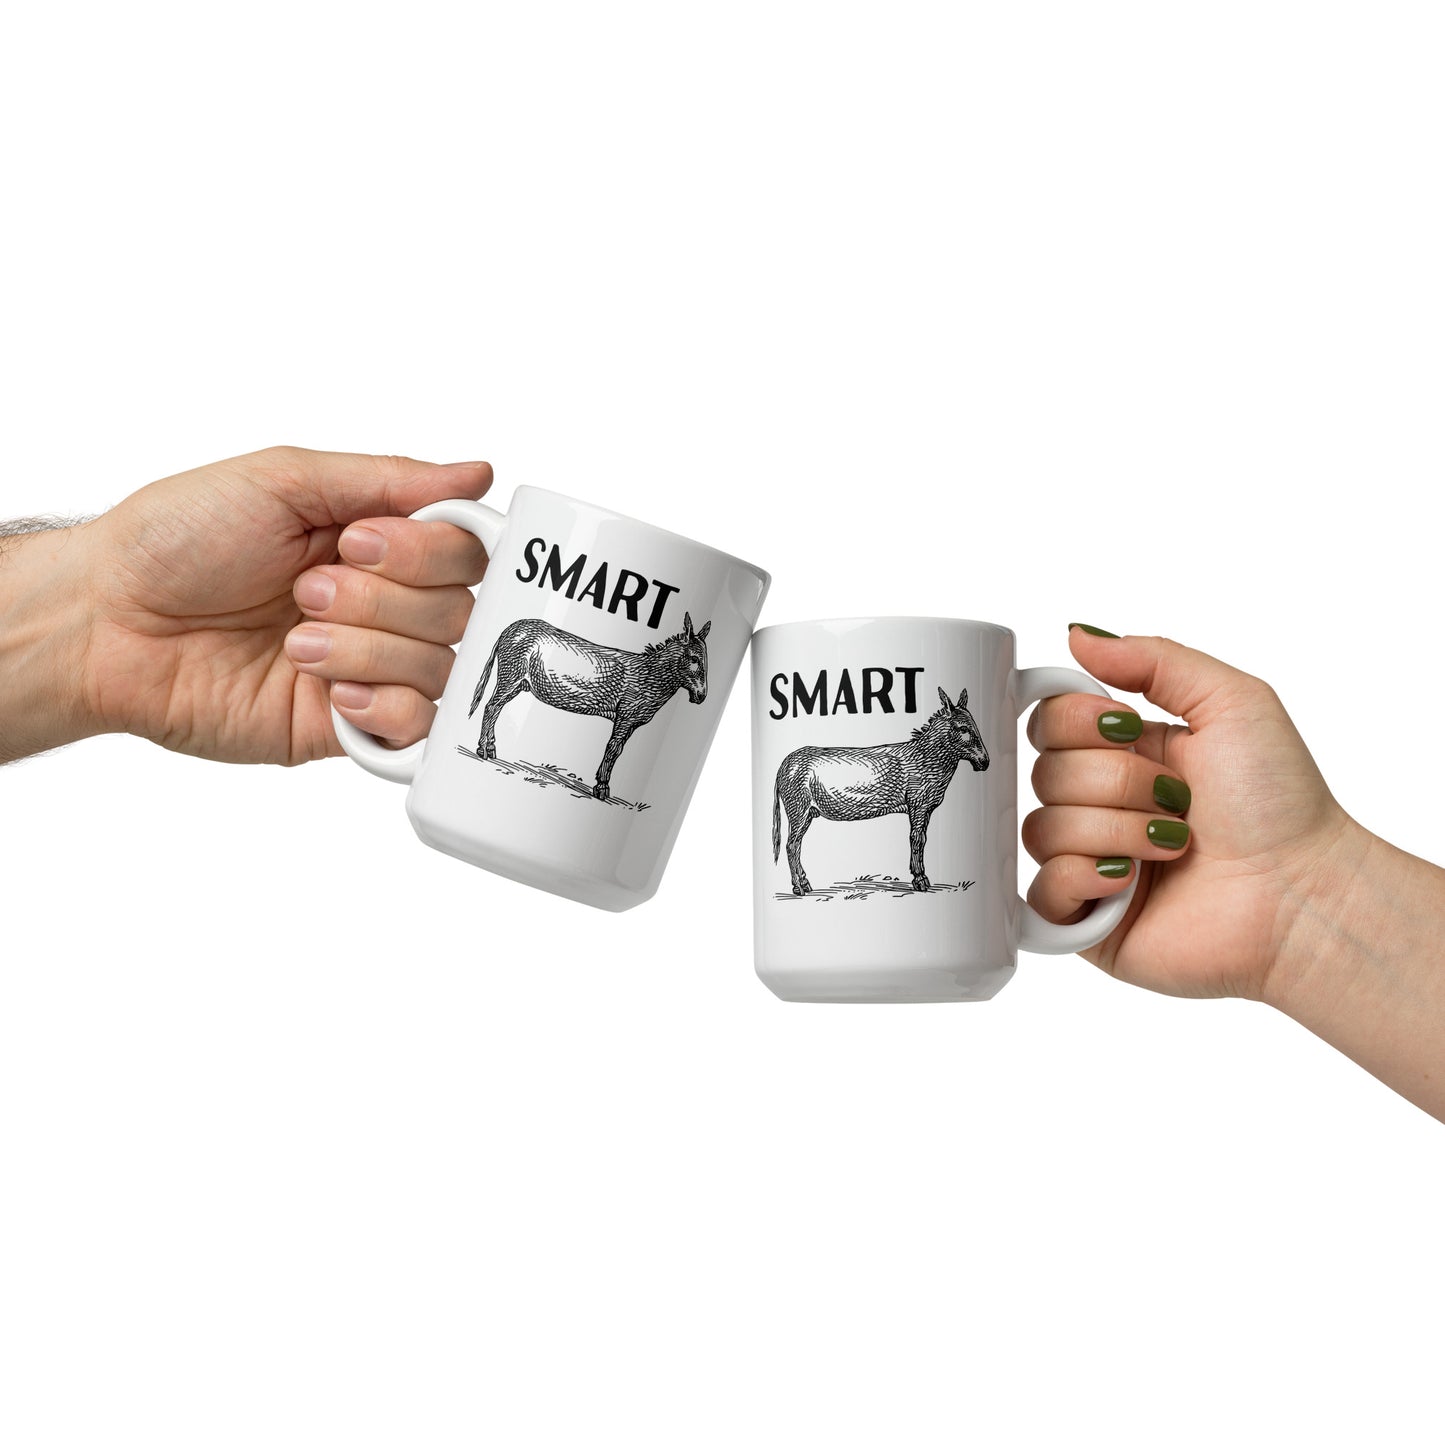 The Smart Ass Statement White Ceramic Coffee Mug